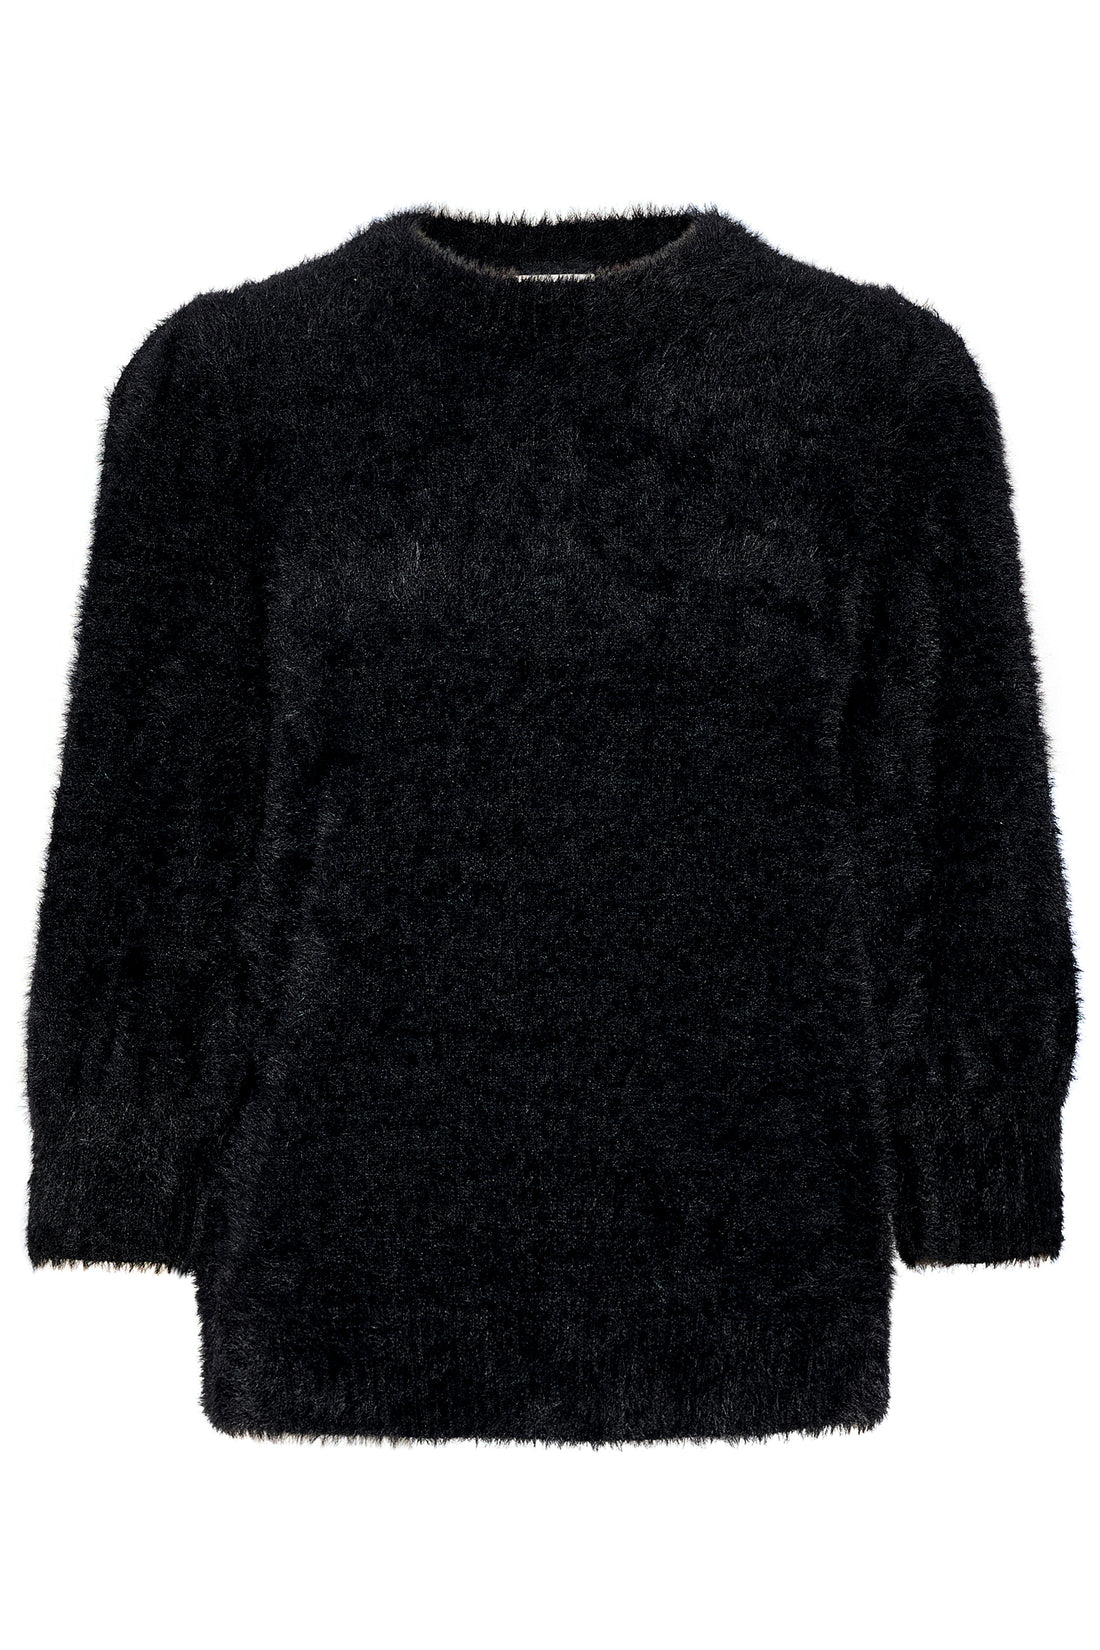 Saint Tropez Banni Super Soft Pullover in Black